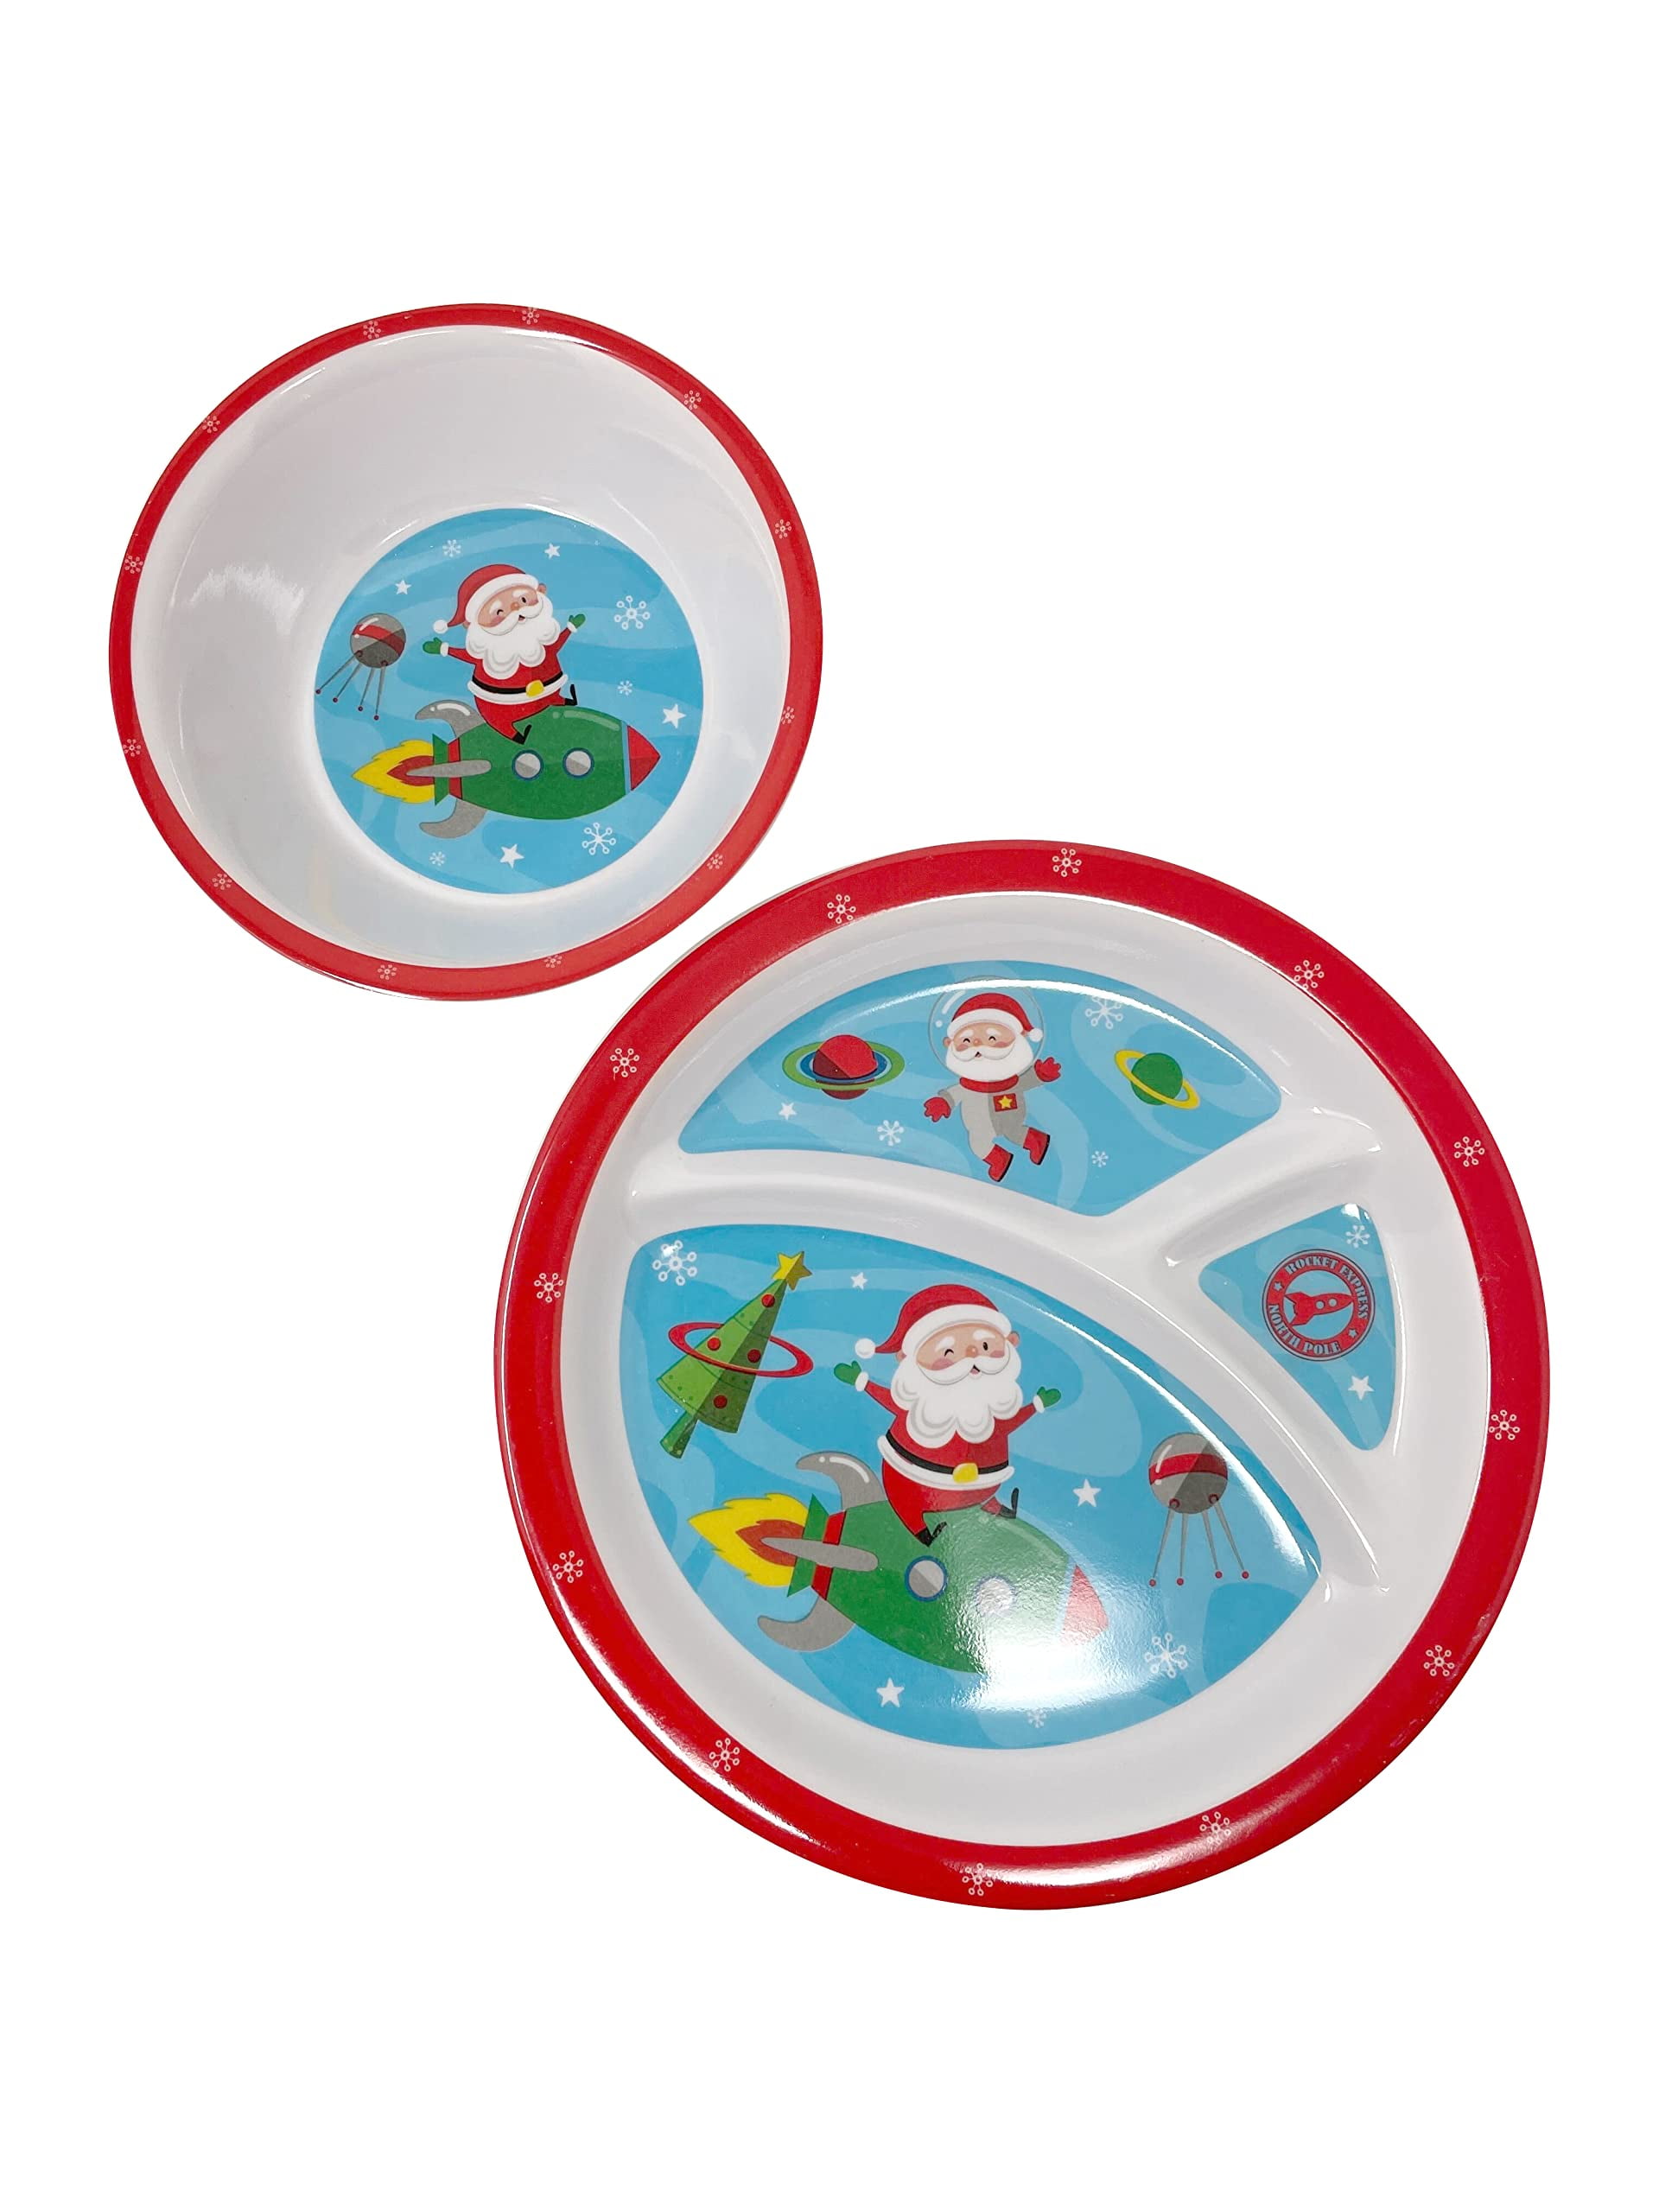 Kids Divided Plates with Bowl Set for Christmas, Christmas